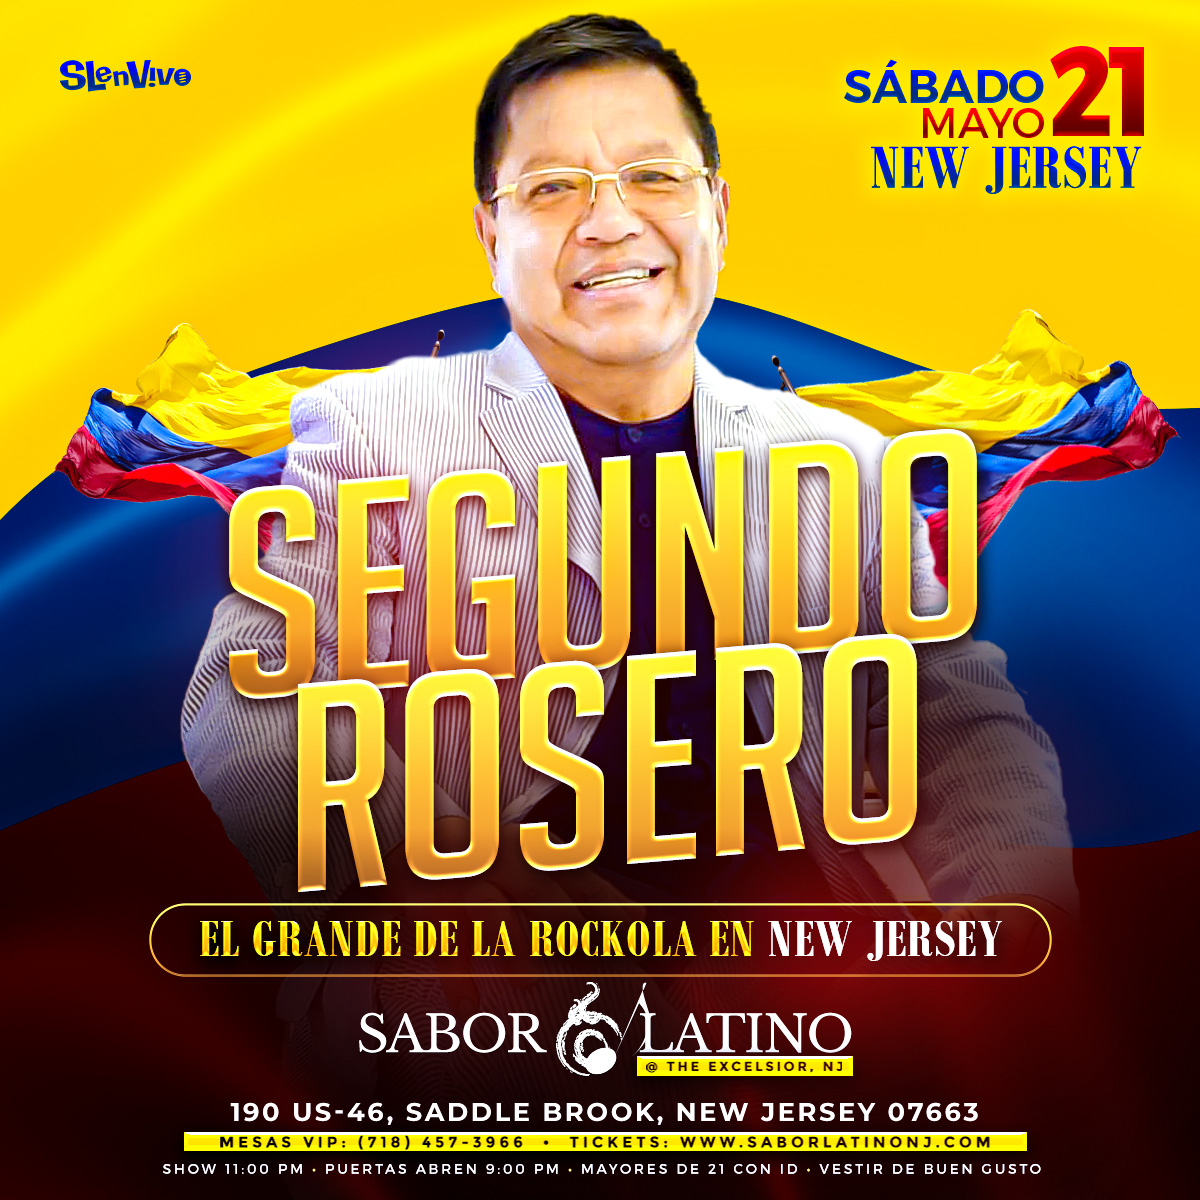 SEGUNDO ROSERO ! NEW JERSEY